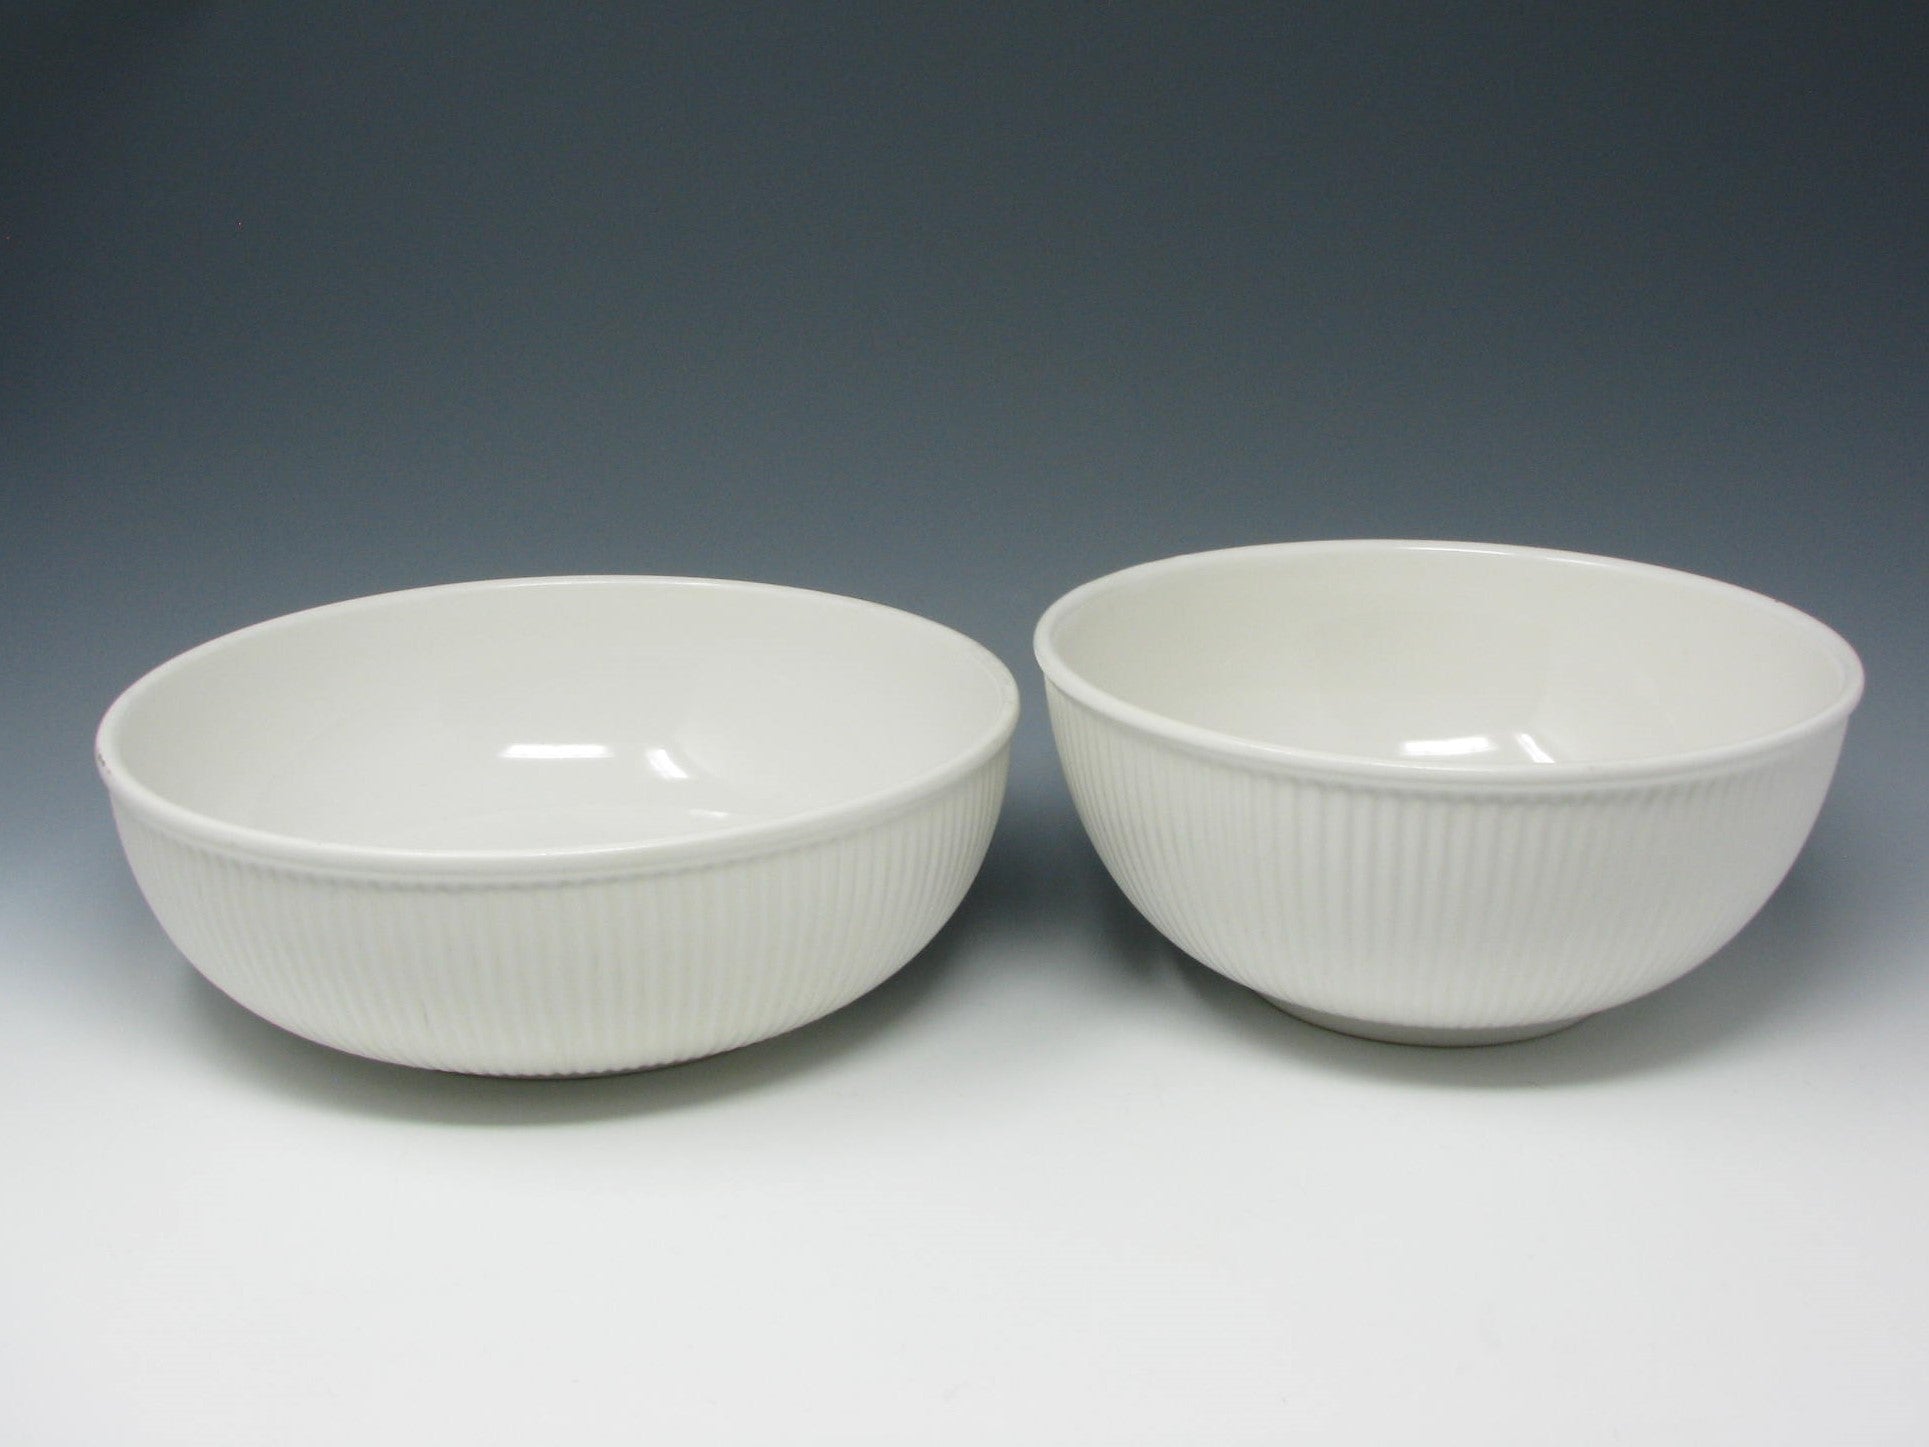 edgebrookhouse - Vintage Dansk Rondure Rice White Stoneware Serving Bowls - 2 Pieces